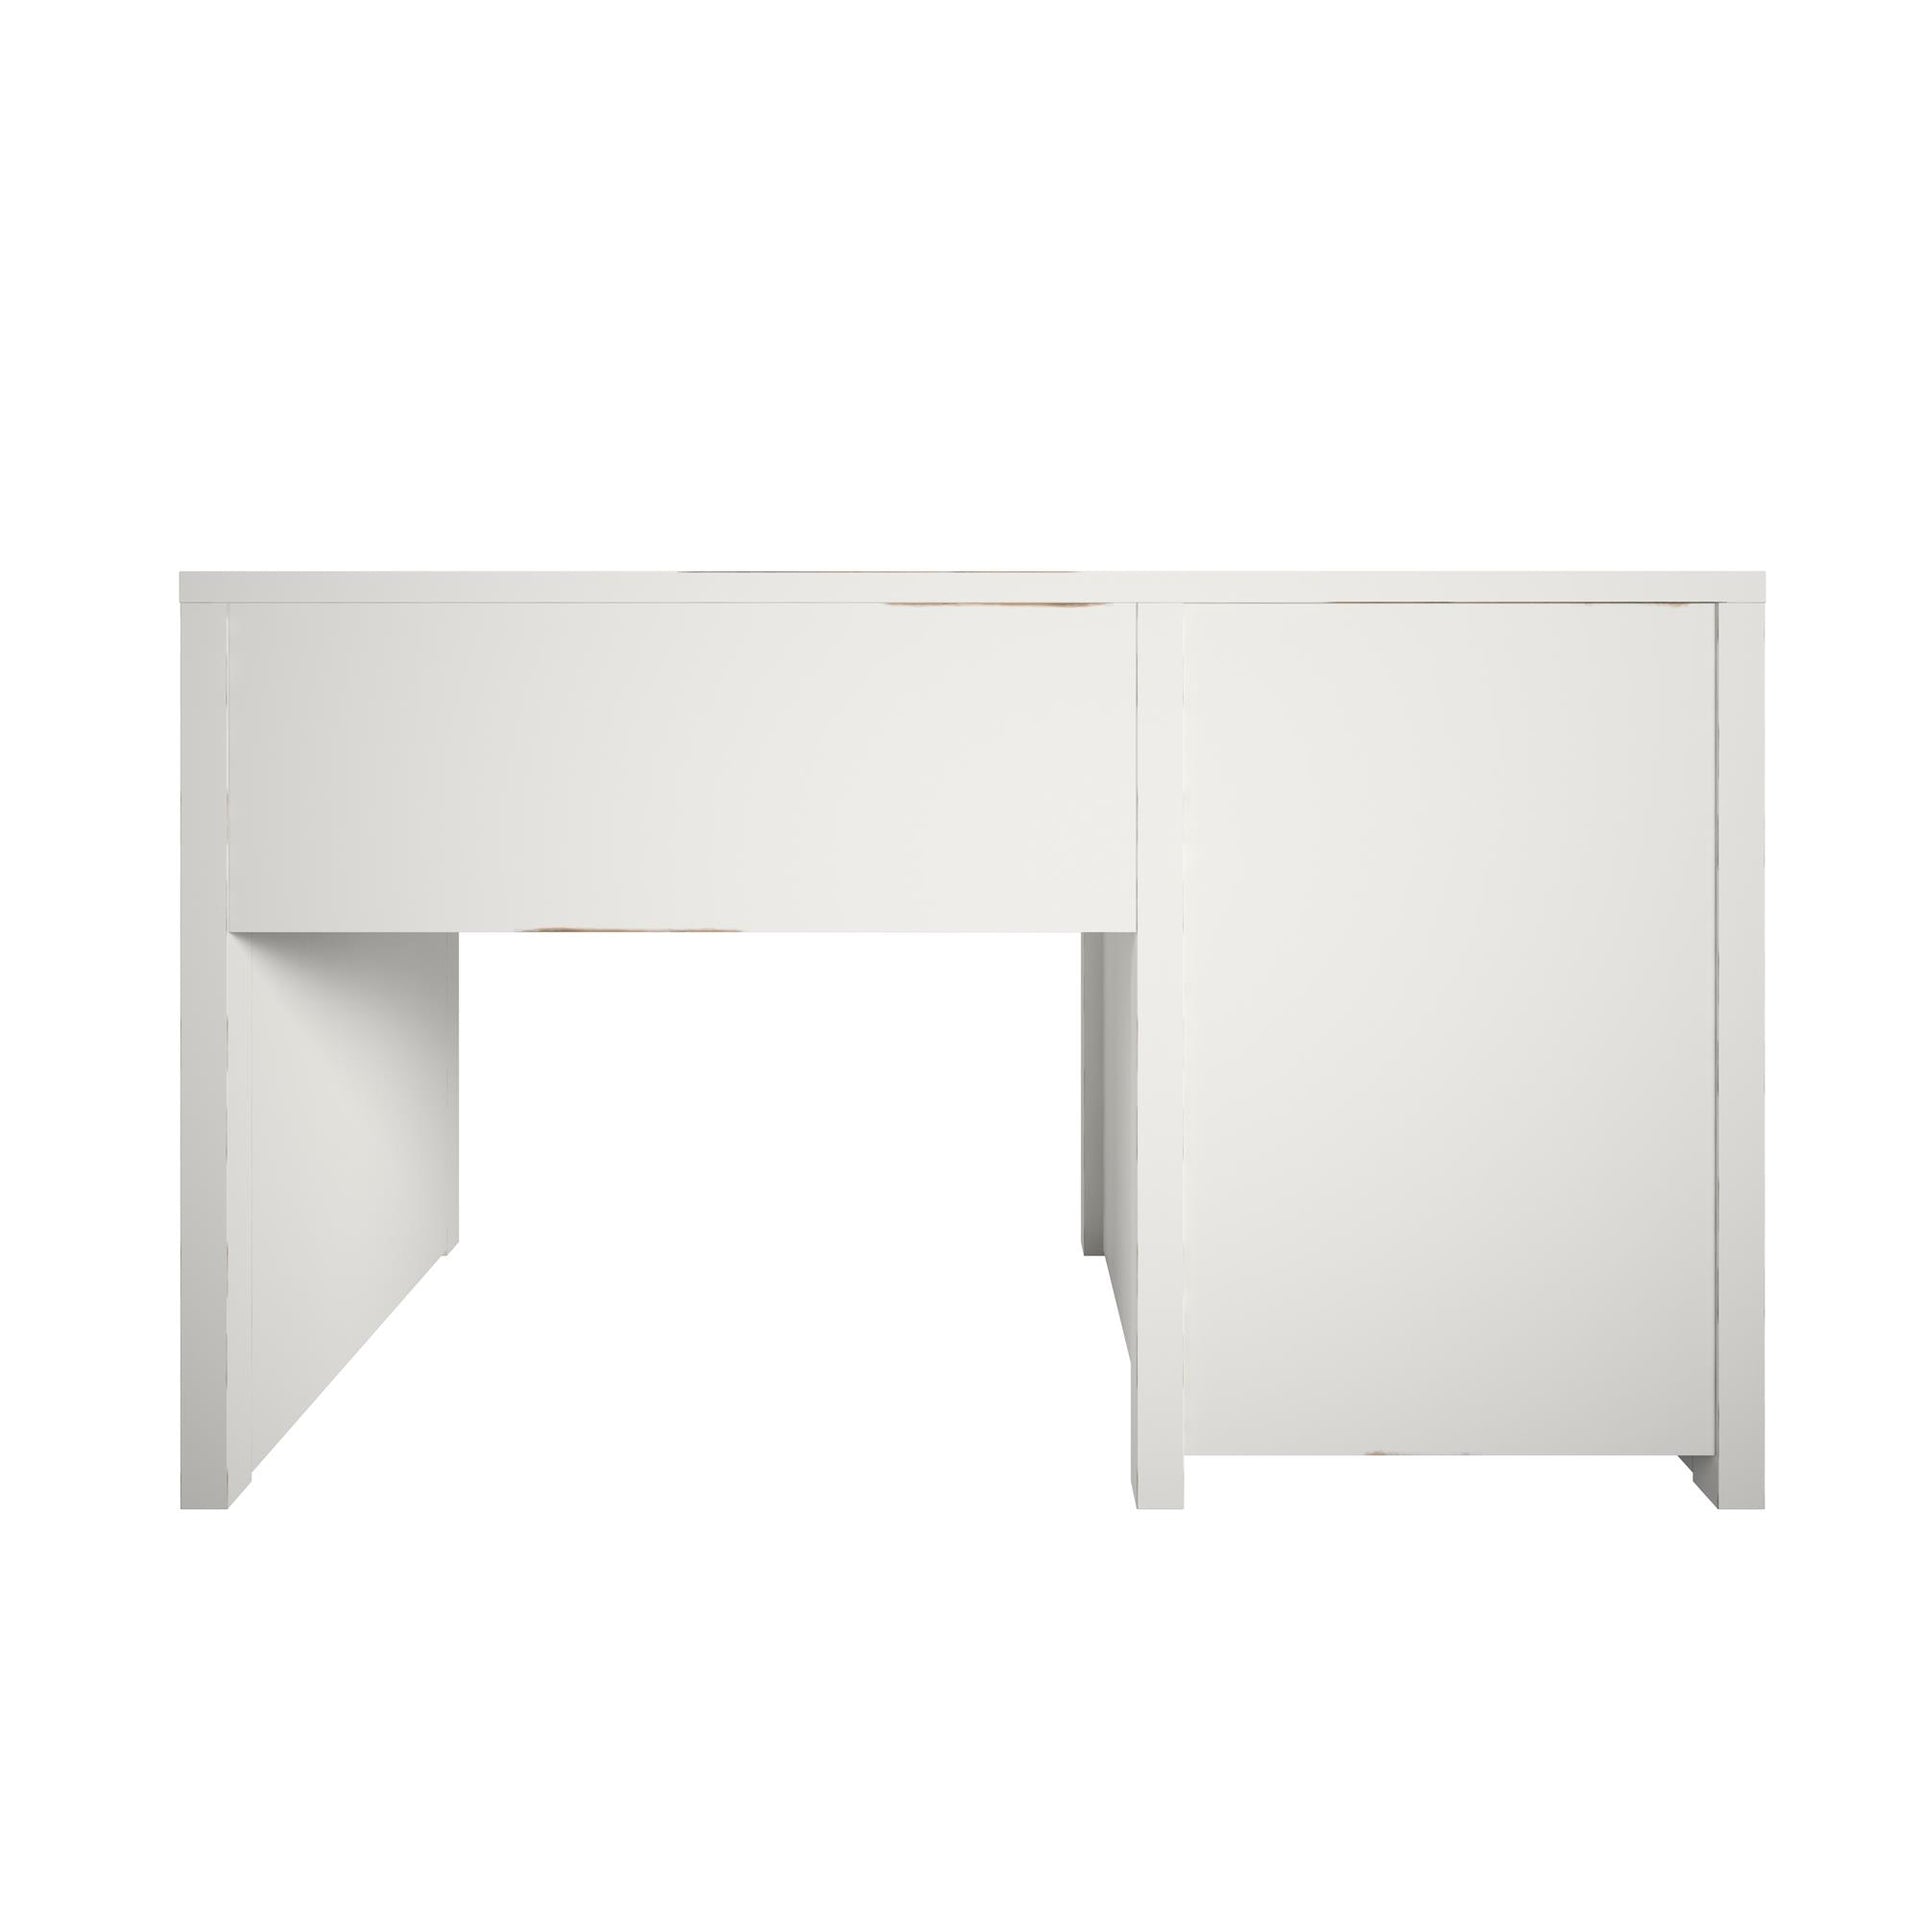 Monarch Hill Haven Single Pedestal Desk and Nightstand Bundle - White